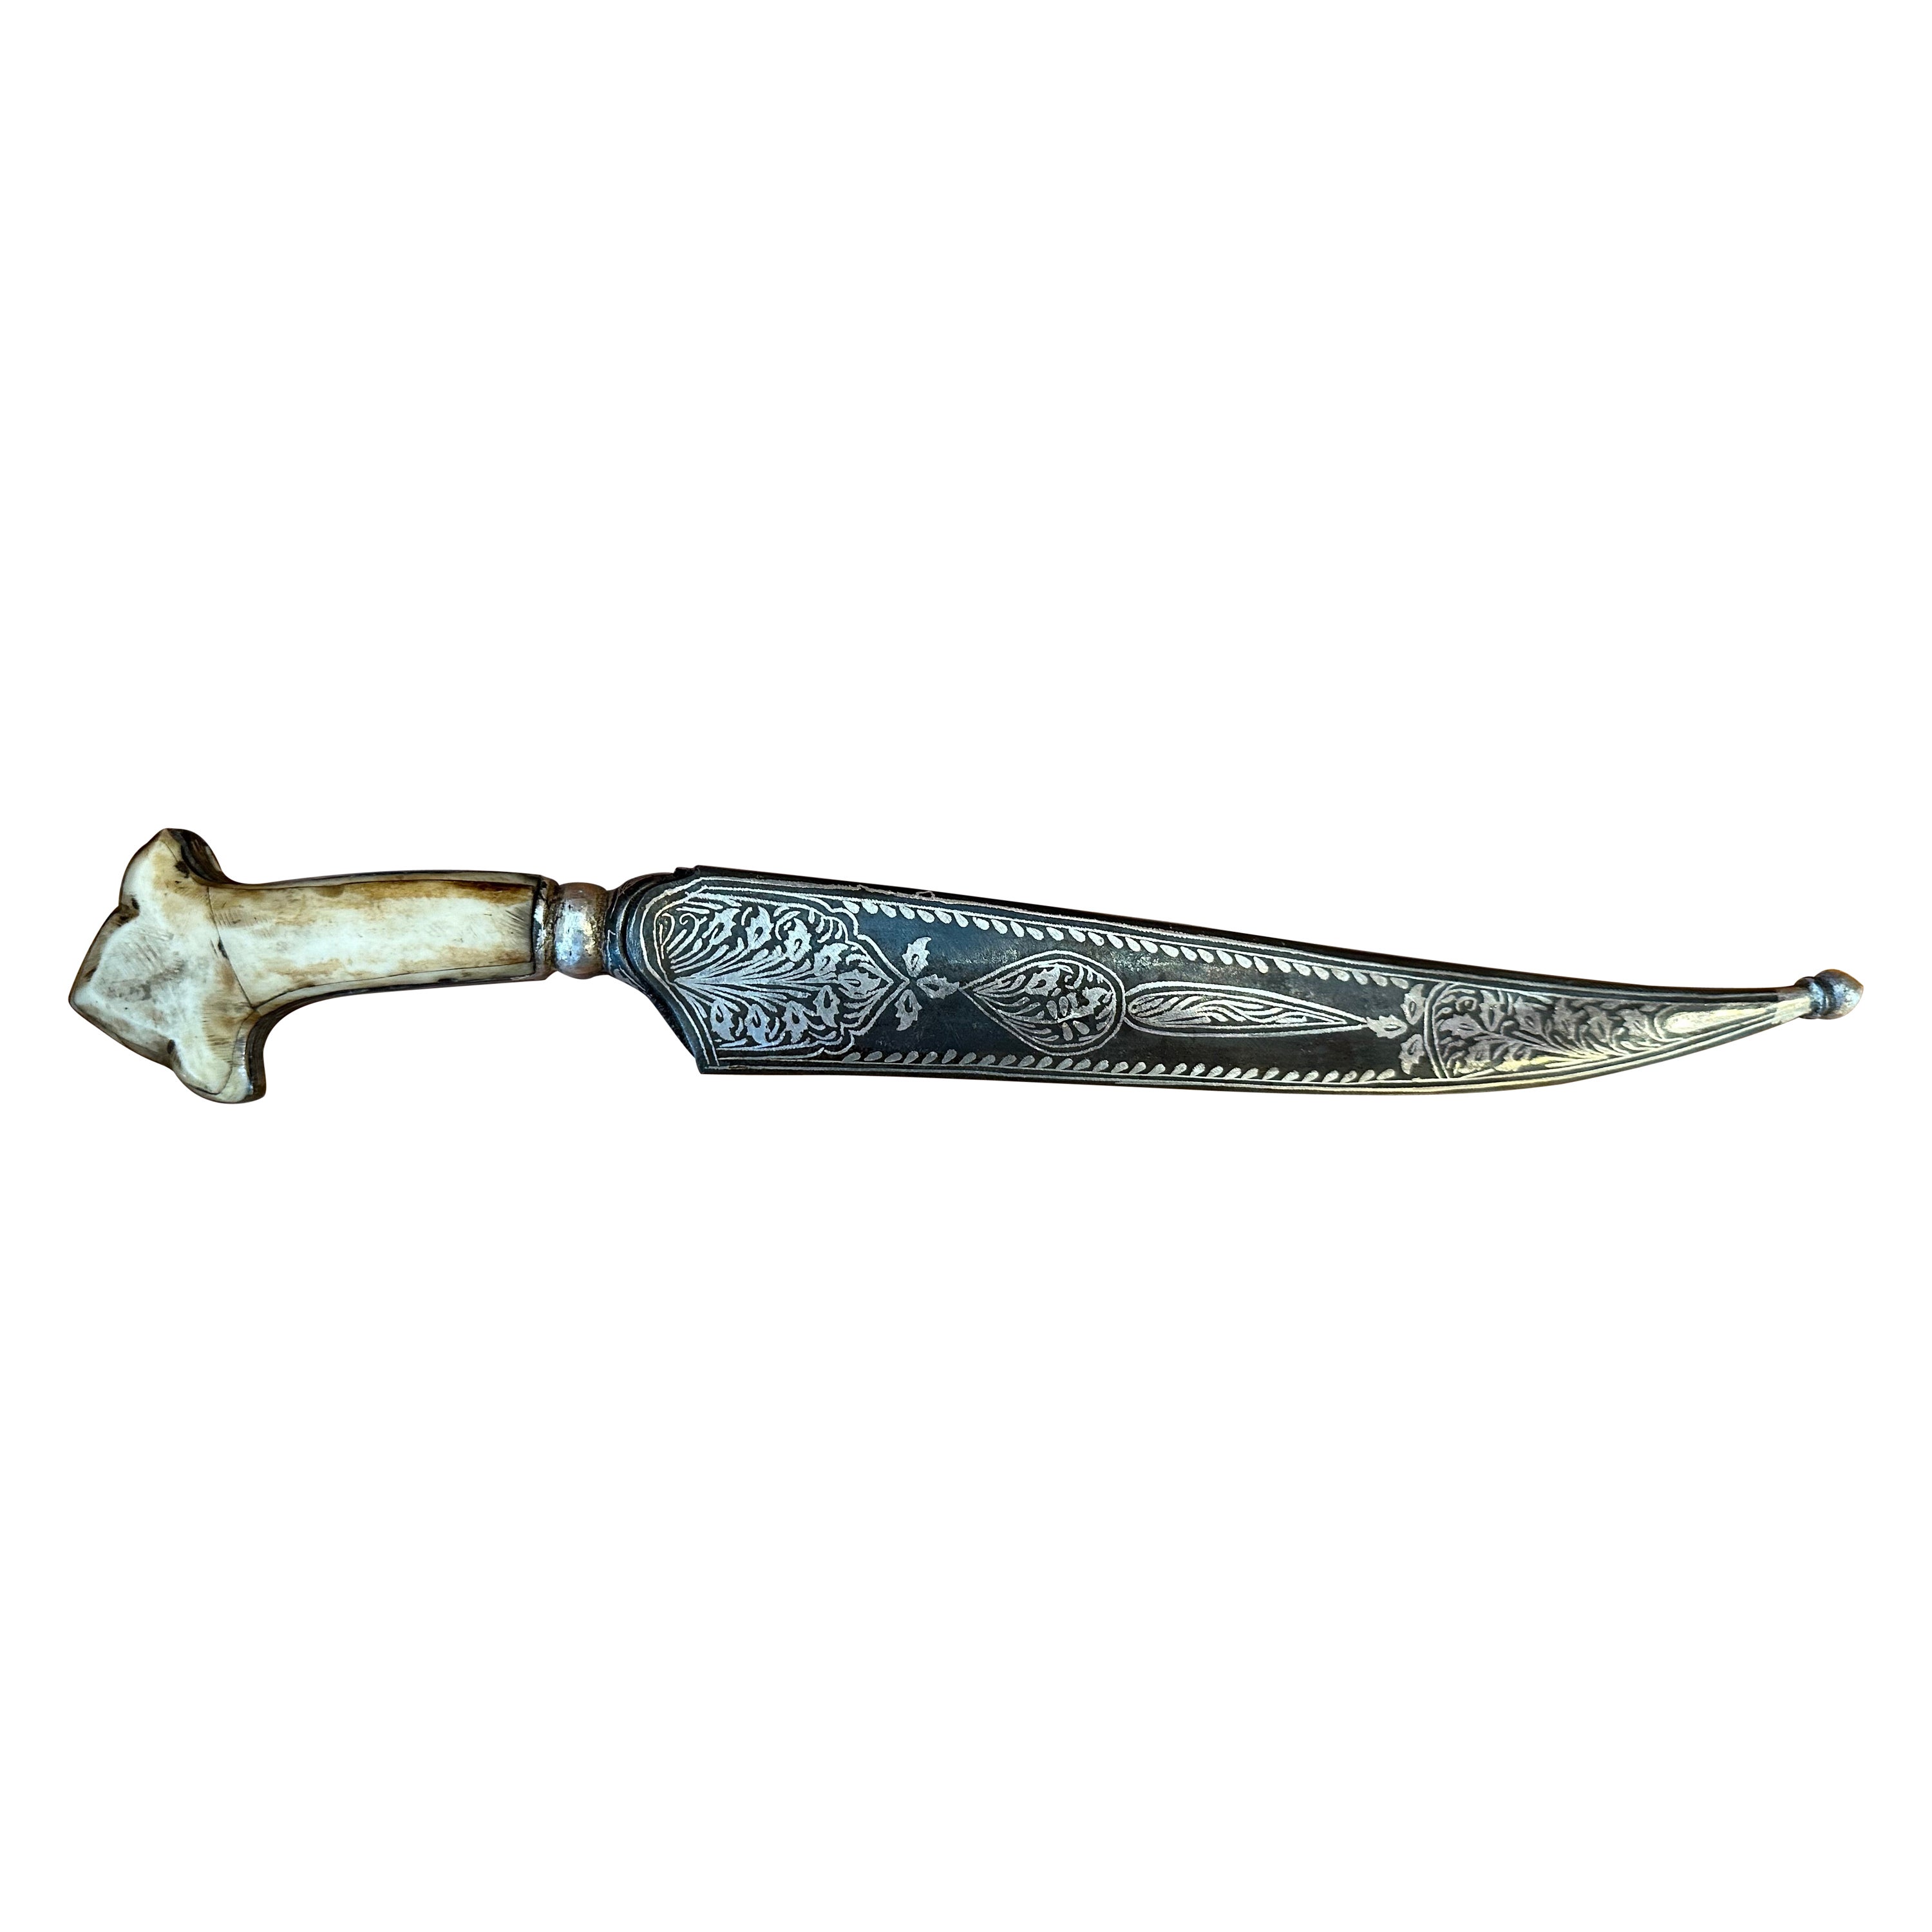 Silver “Jambiya” or Curved Dagger With Its Sheath